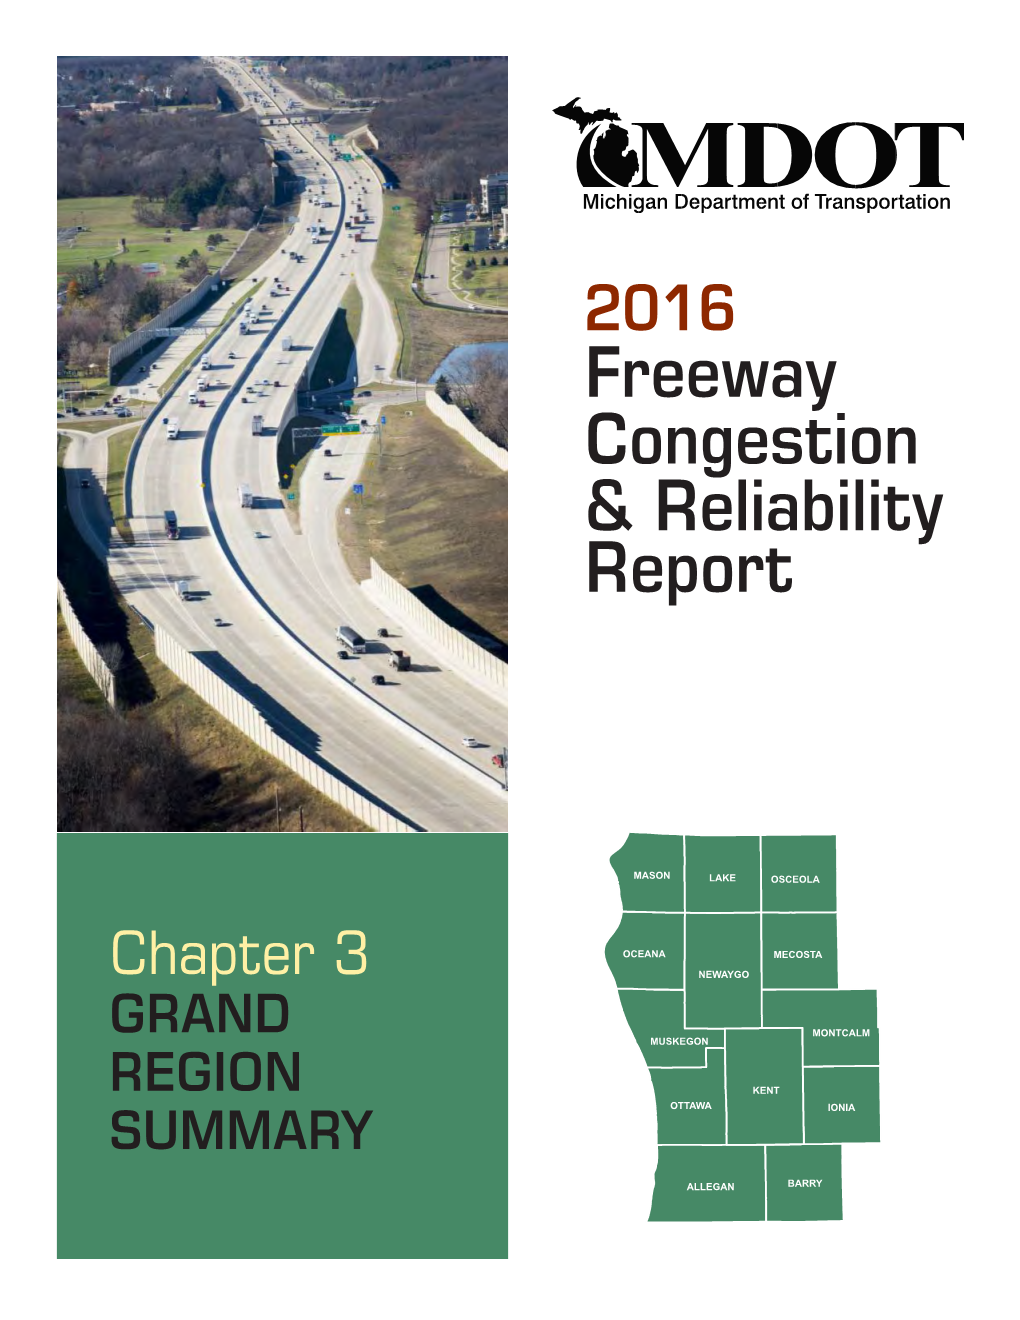 2016 Freeway Congestion & Reliabliity Report-Chapter 3